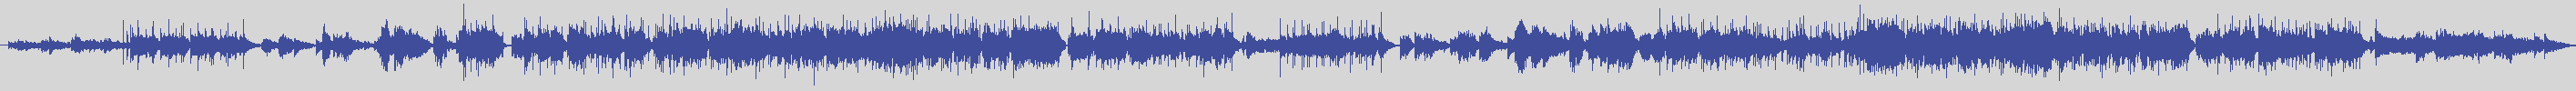 digiphonic_records [DPR002] Nino D'Angelo - Me Manche Tu [Original Mix] audio wave form